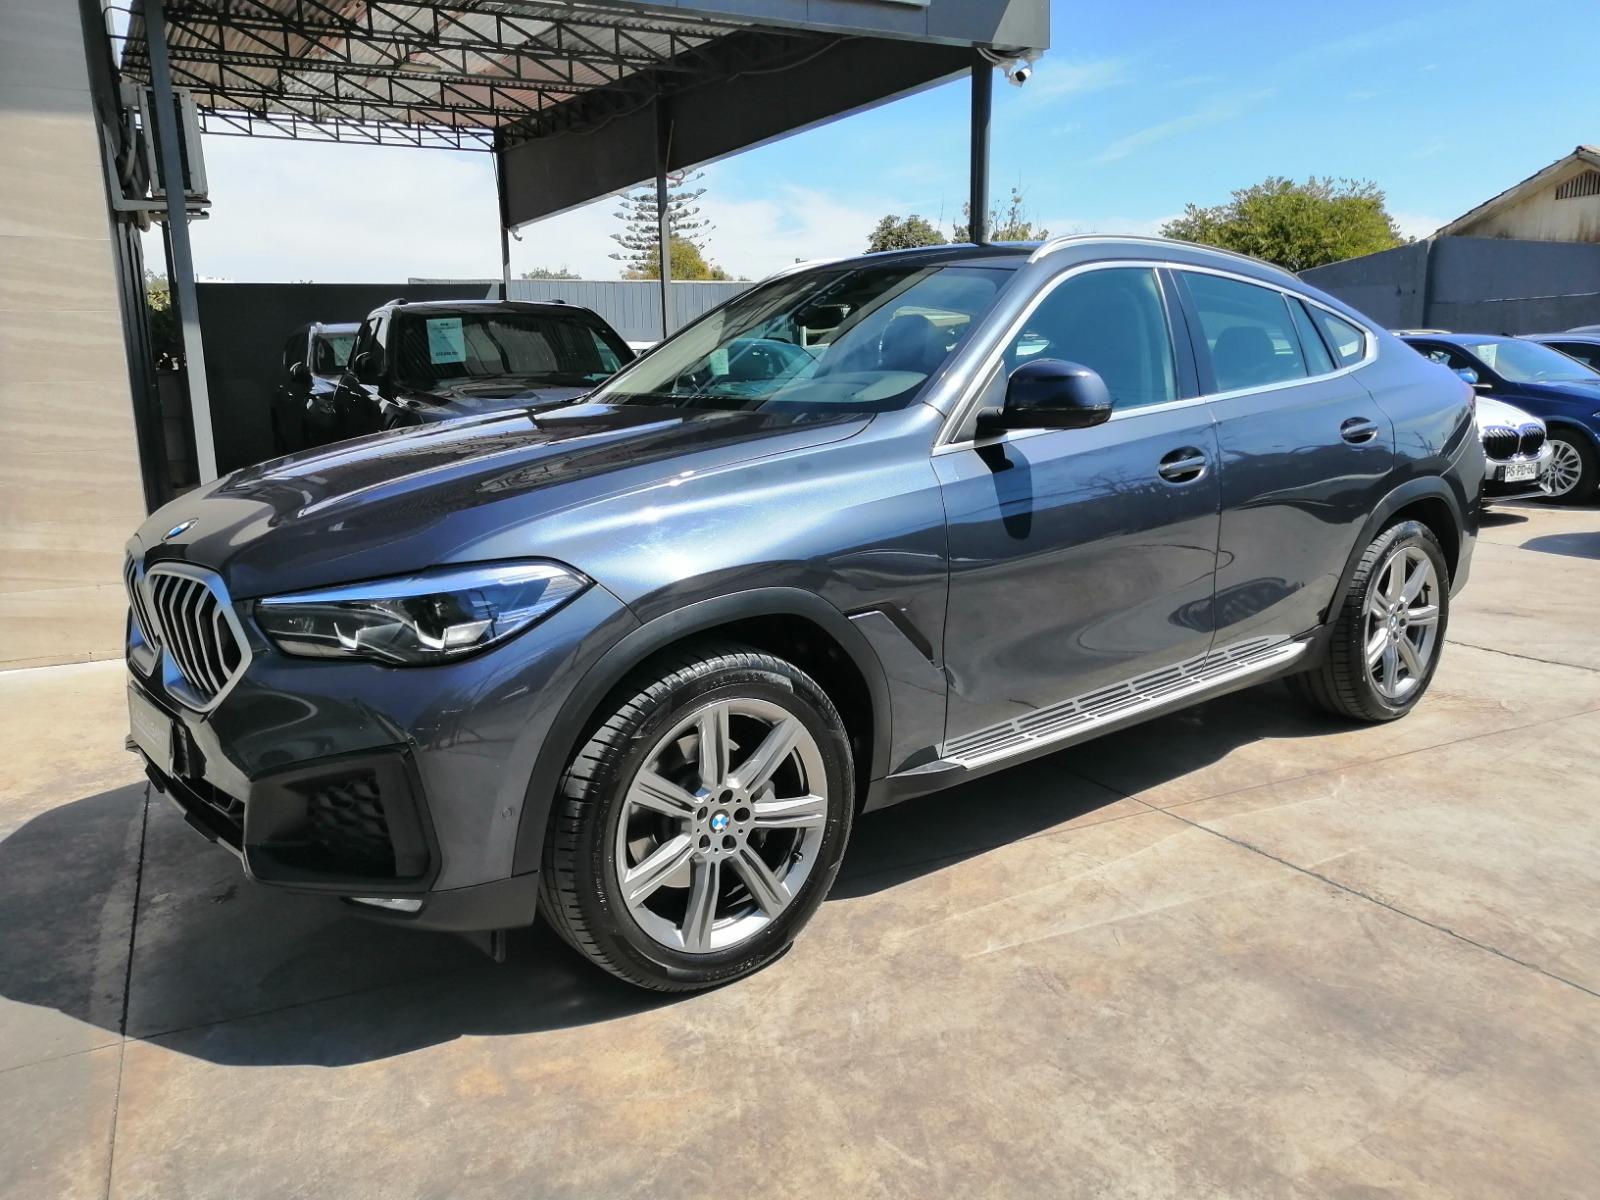 BMW X6 XDRIVE30D 3.0 AT DIESEL 2021 BUEN ESTADO,2 LLAVES - CALDO SANTI